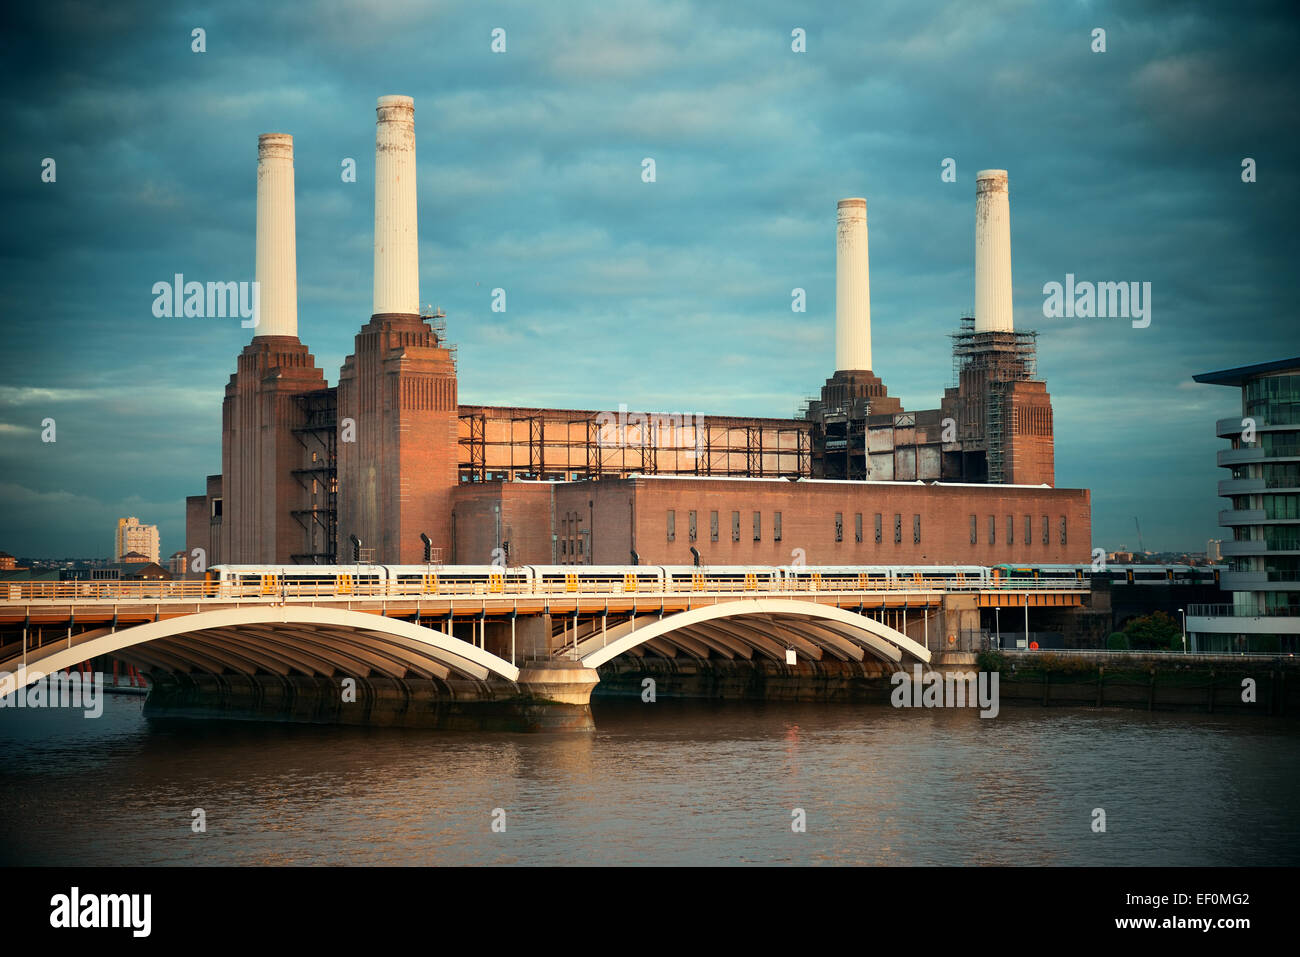 Battersea Power Station over Thames river as the famous London landmark. Stock Photo